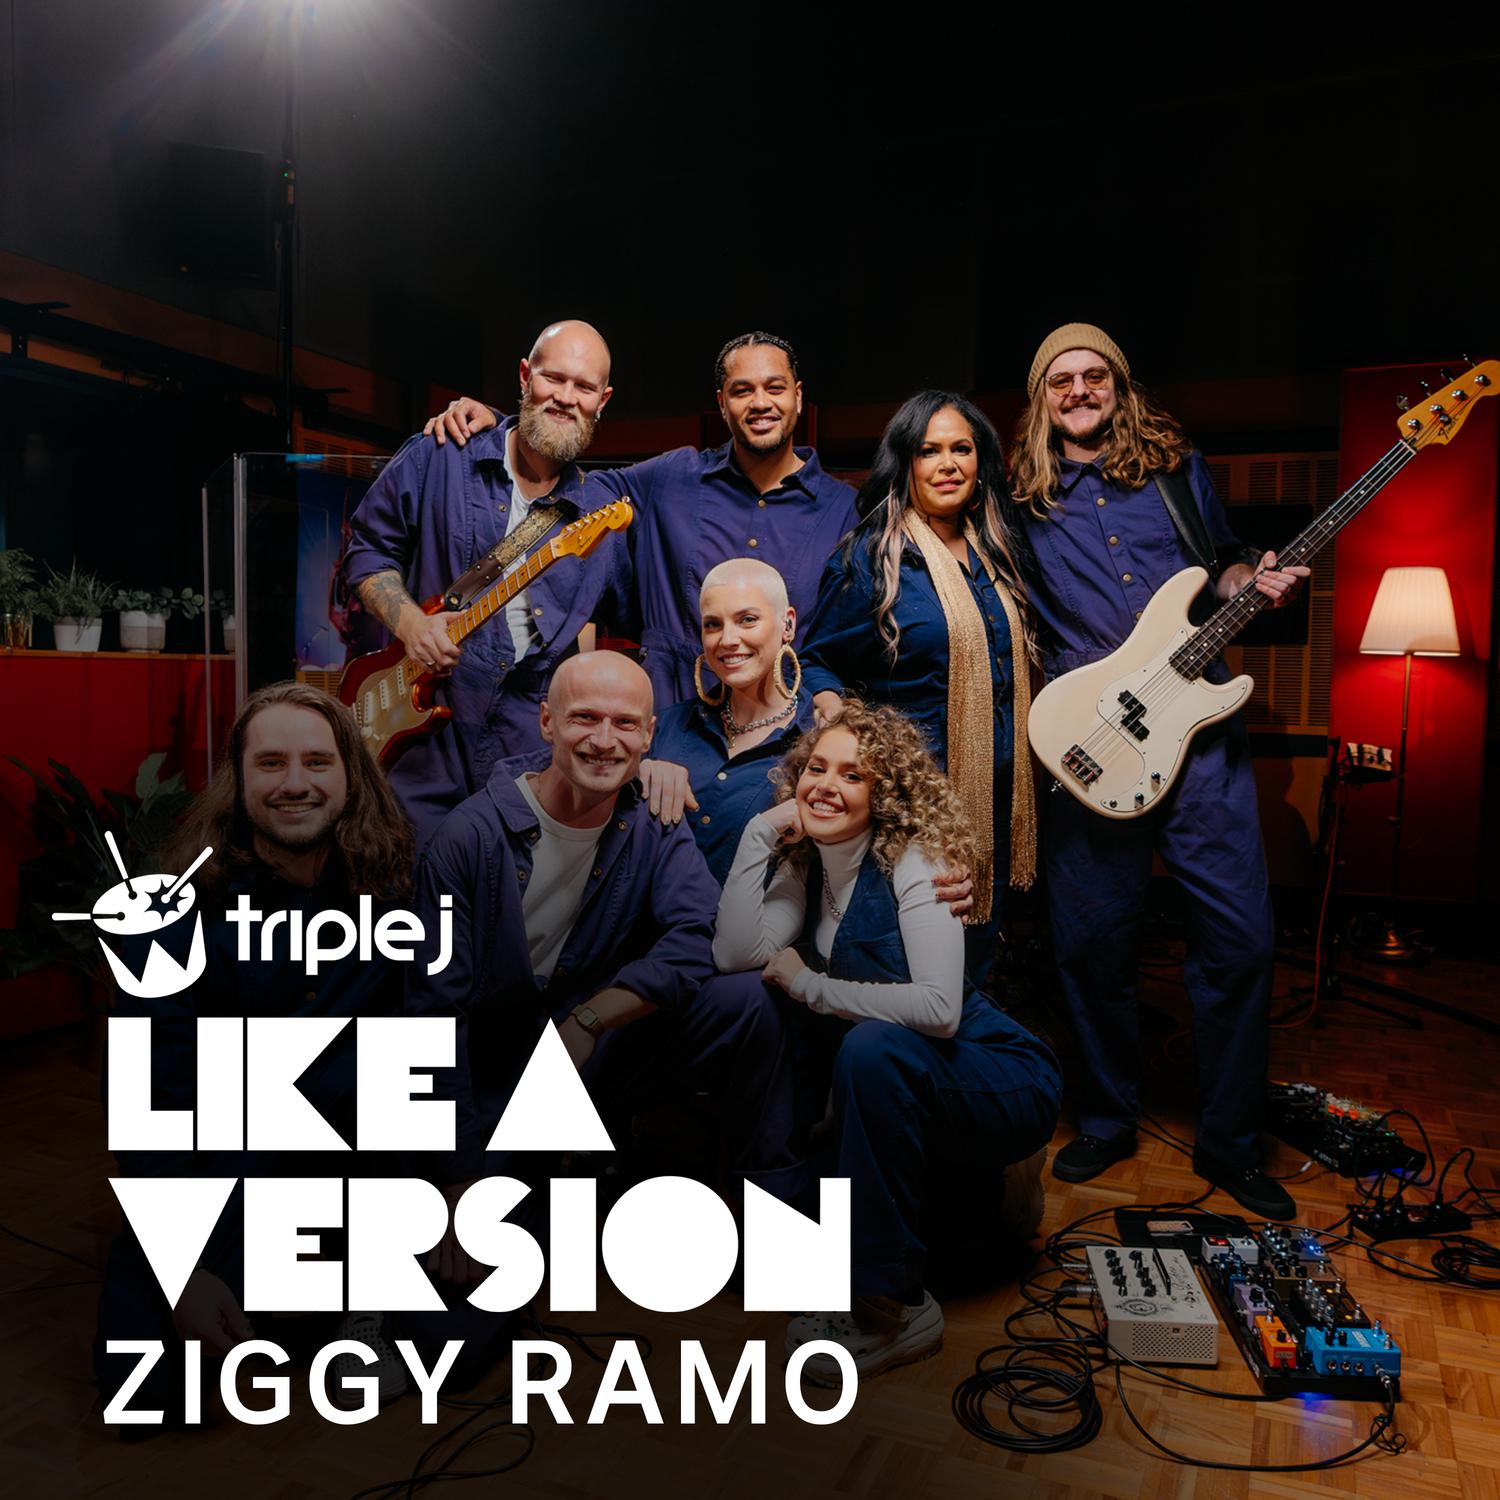 Ziggy Ramo - Doo Wop (That Thing) (triple j Like A Version)